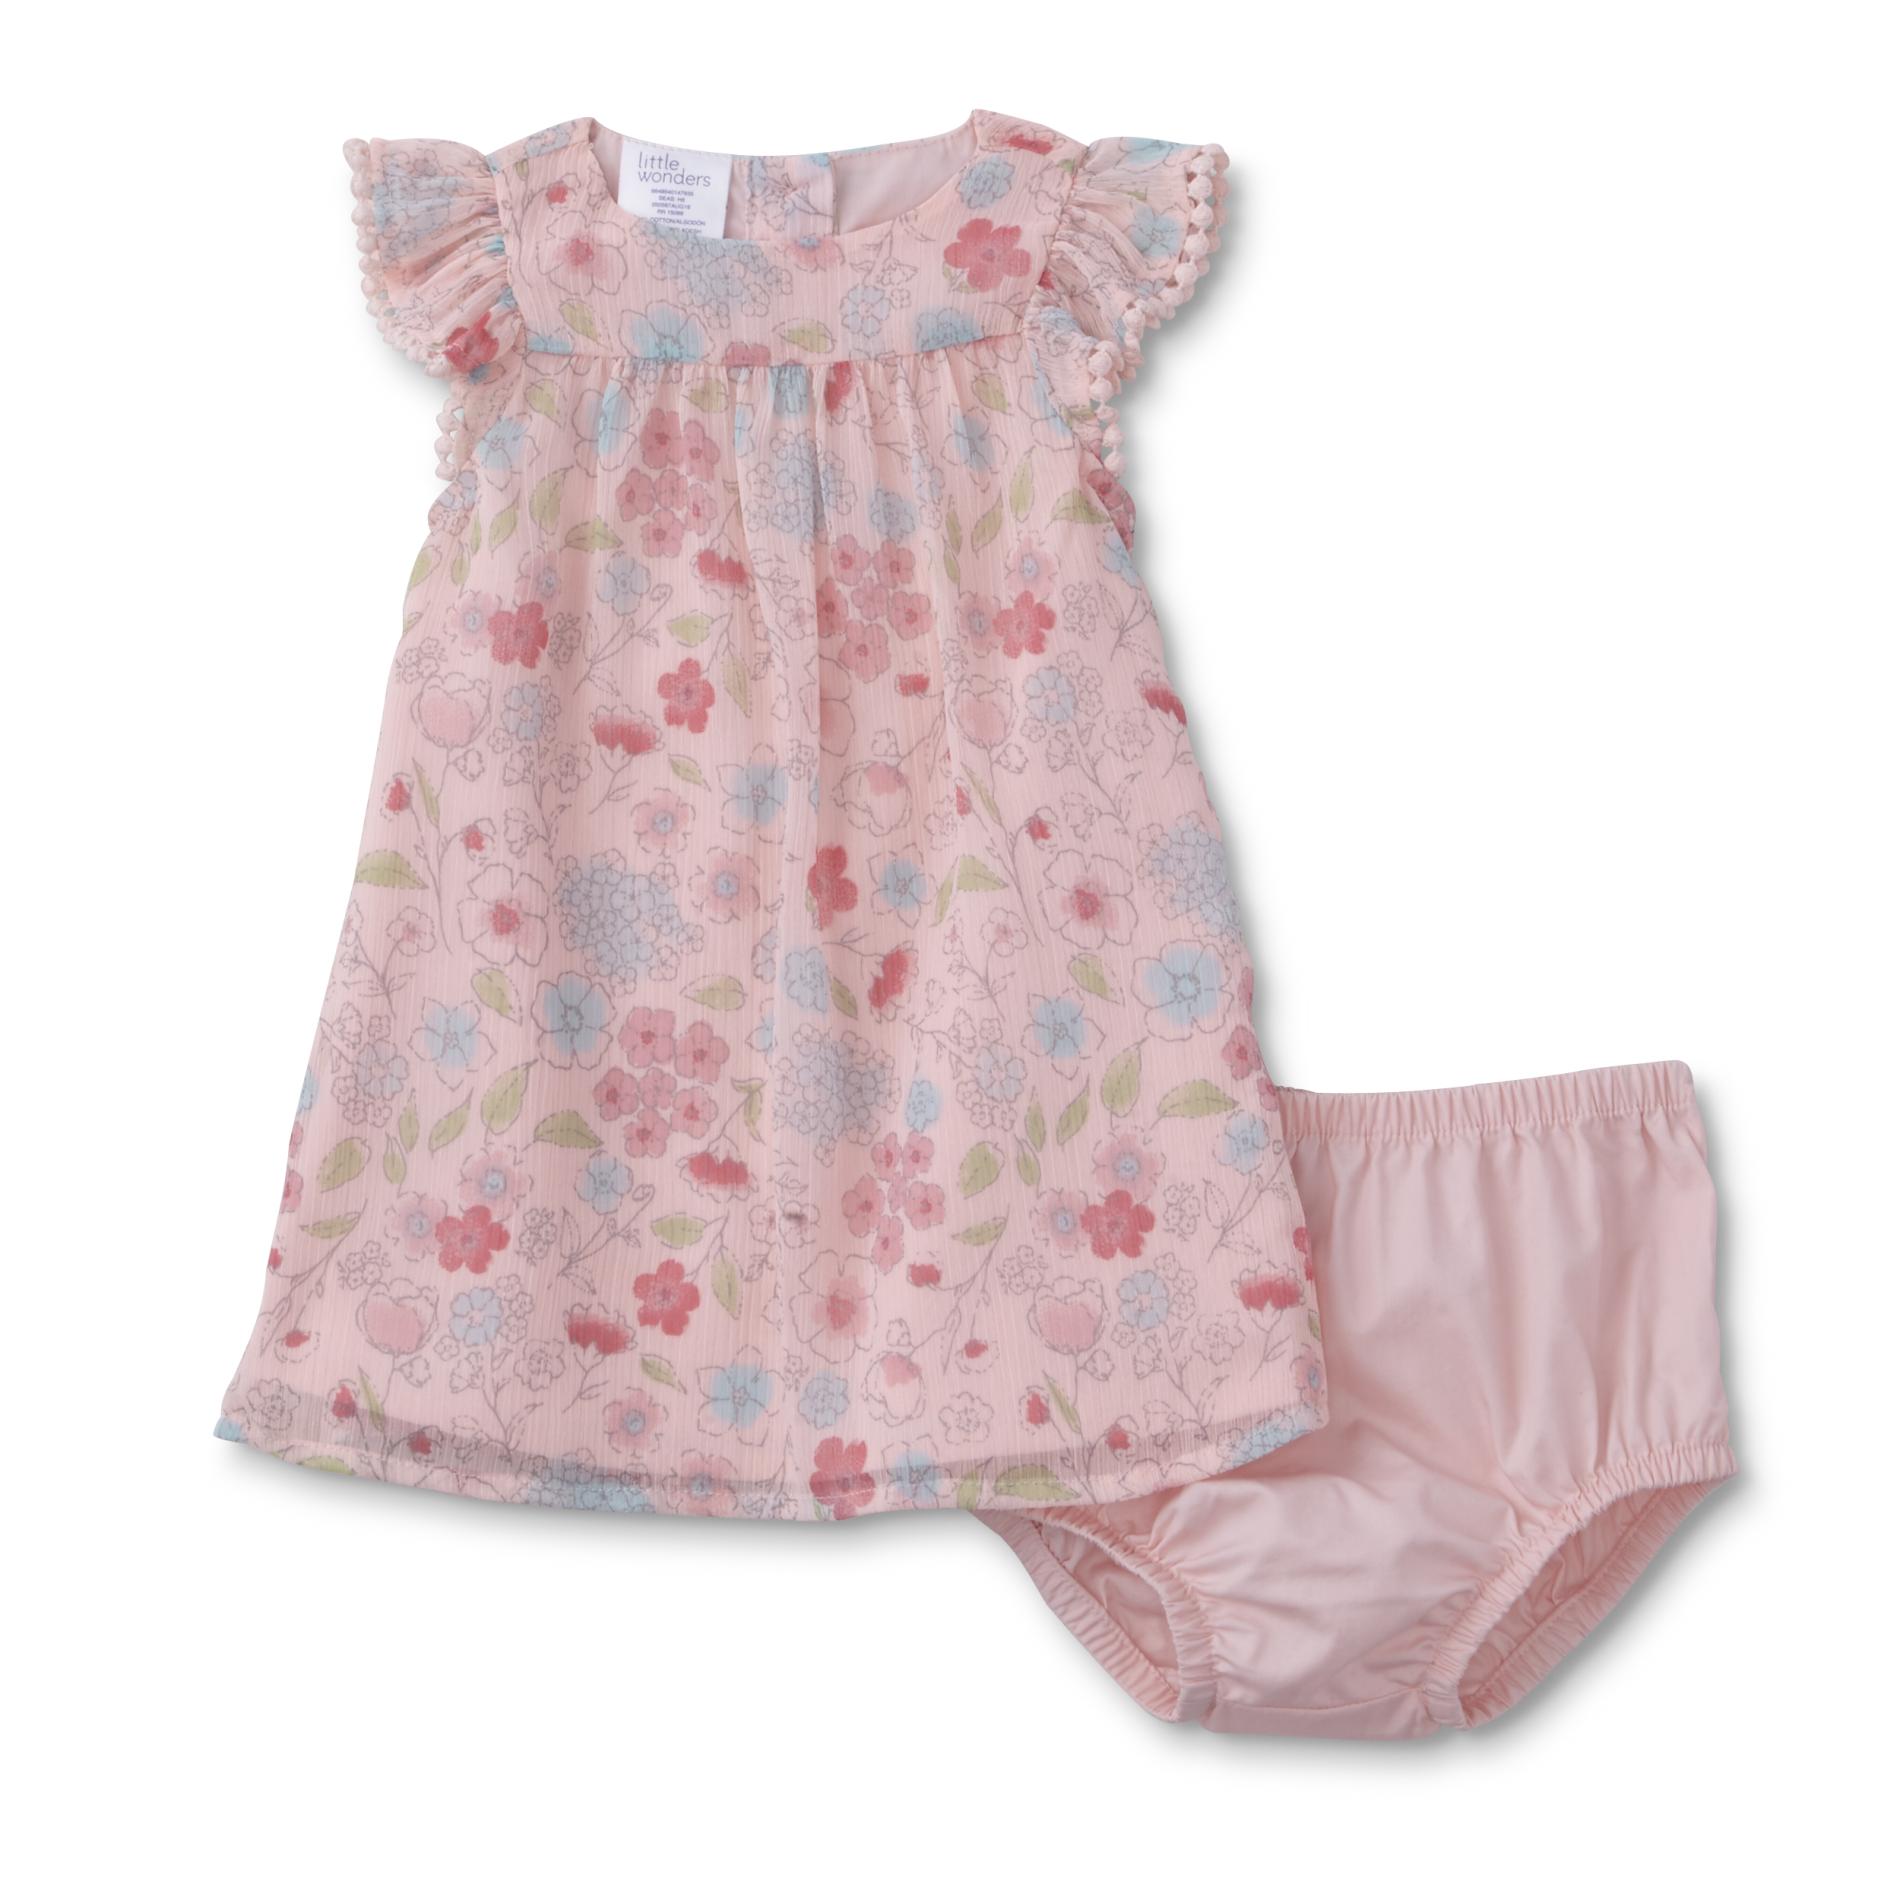 Little Wonders Newborn & Infant Girls' Dress & Diaper Cover - Floral